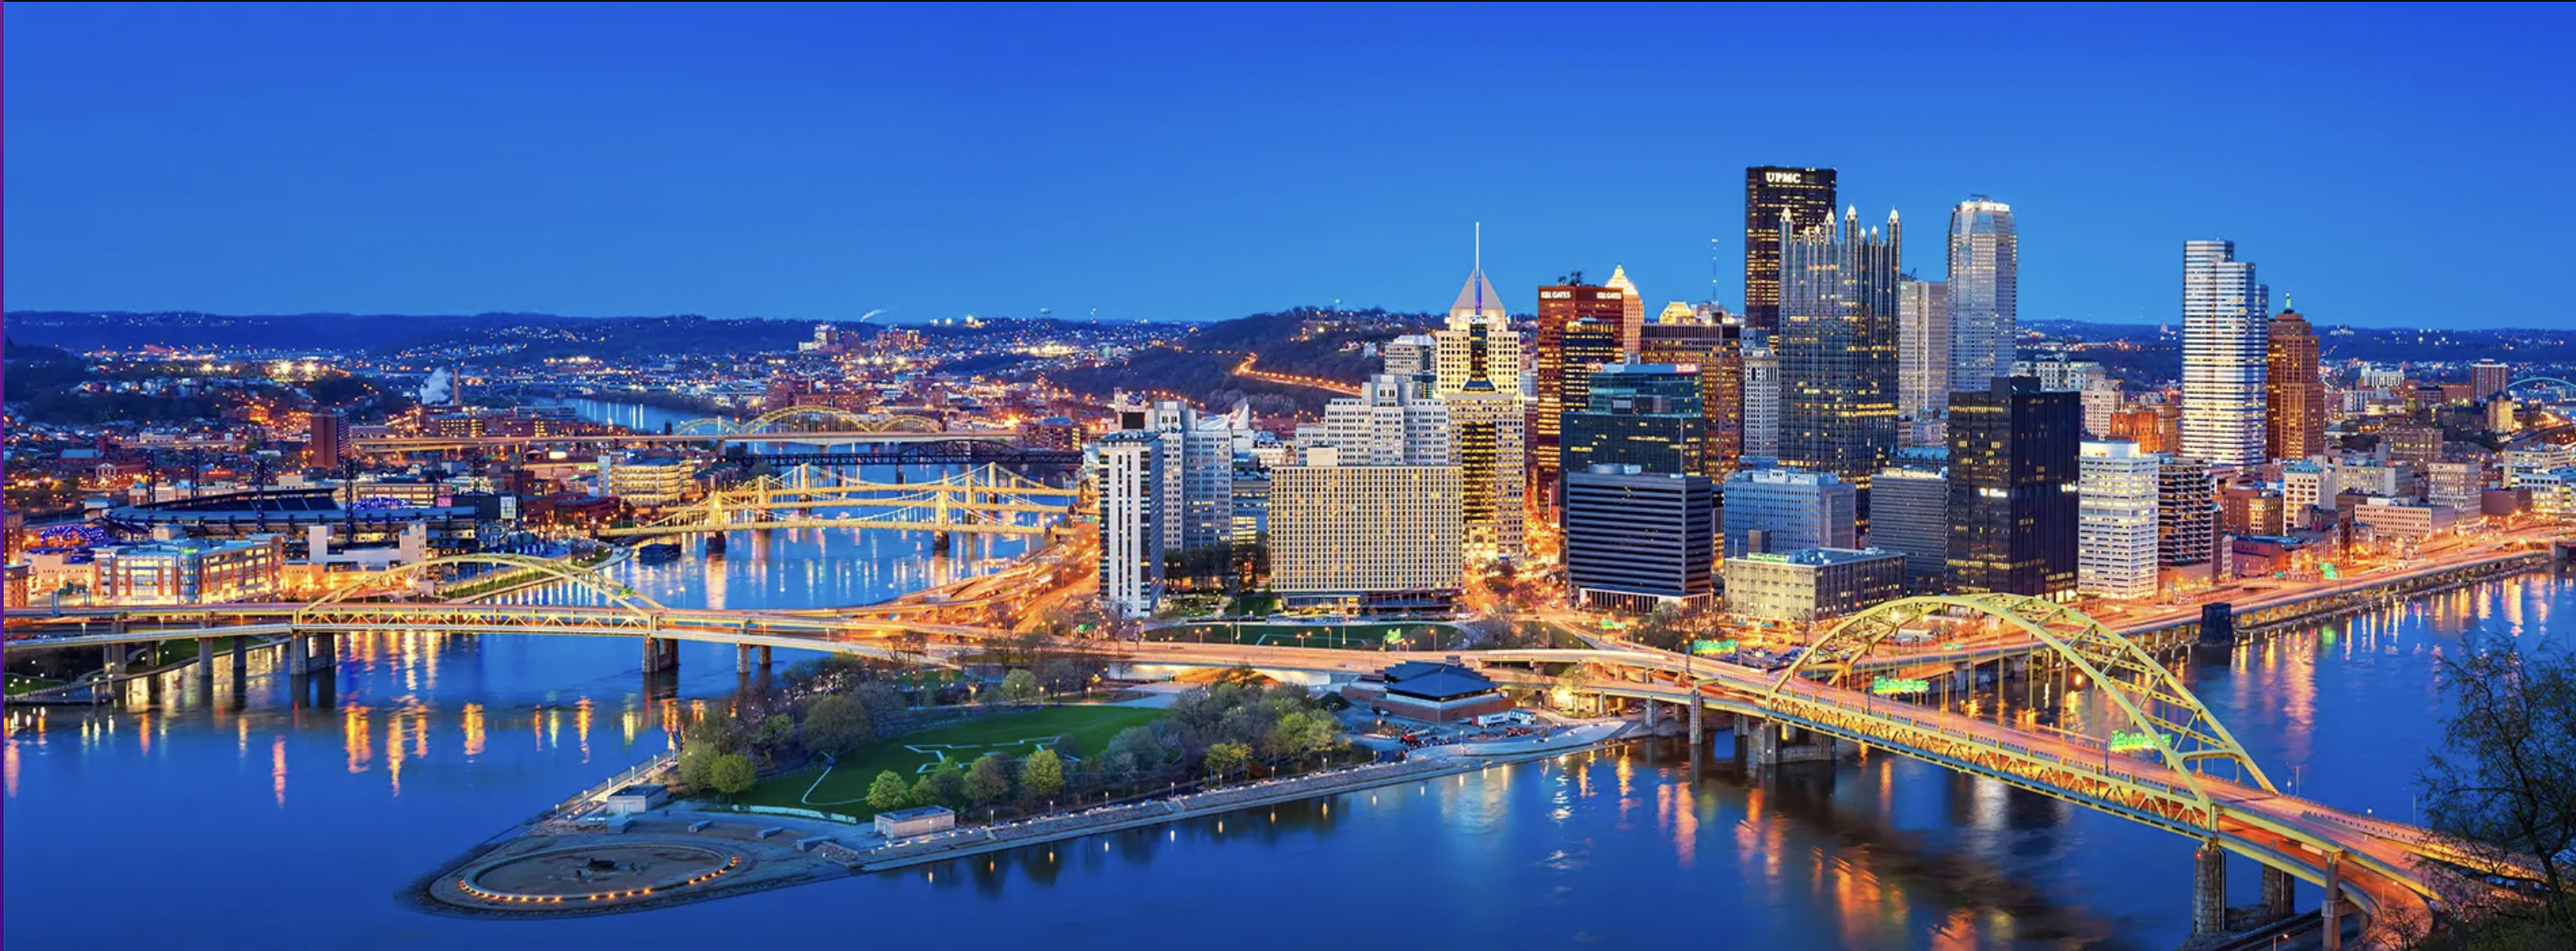 Aerial photograph of Pittsburgh, Pennsylvania